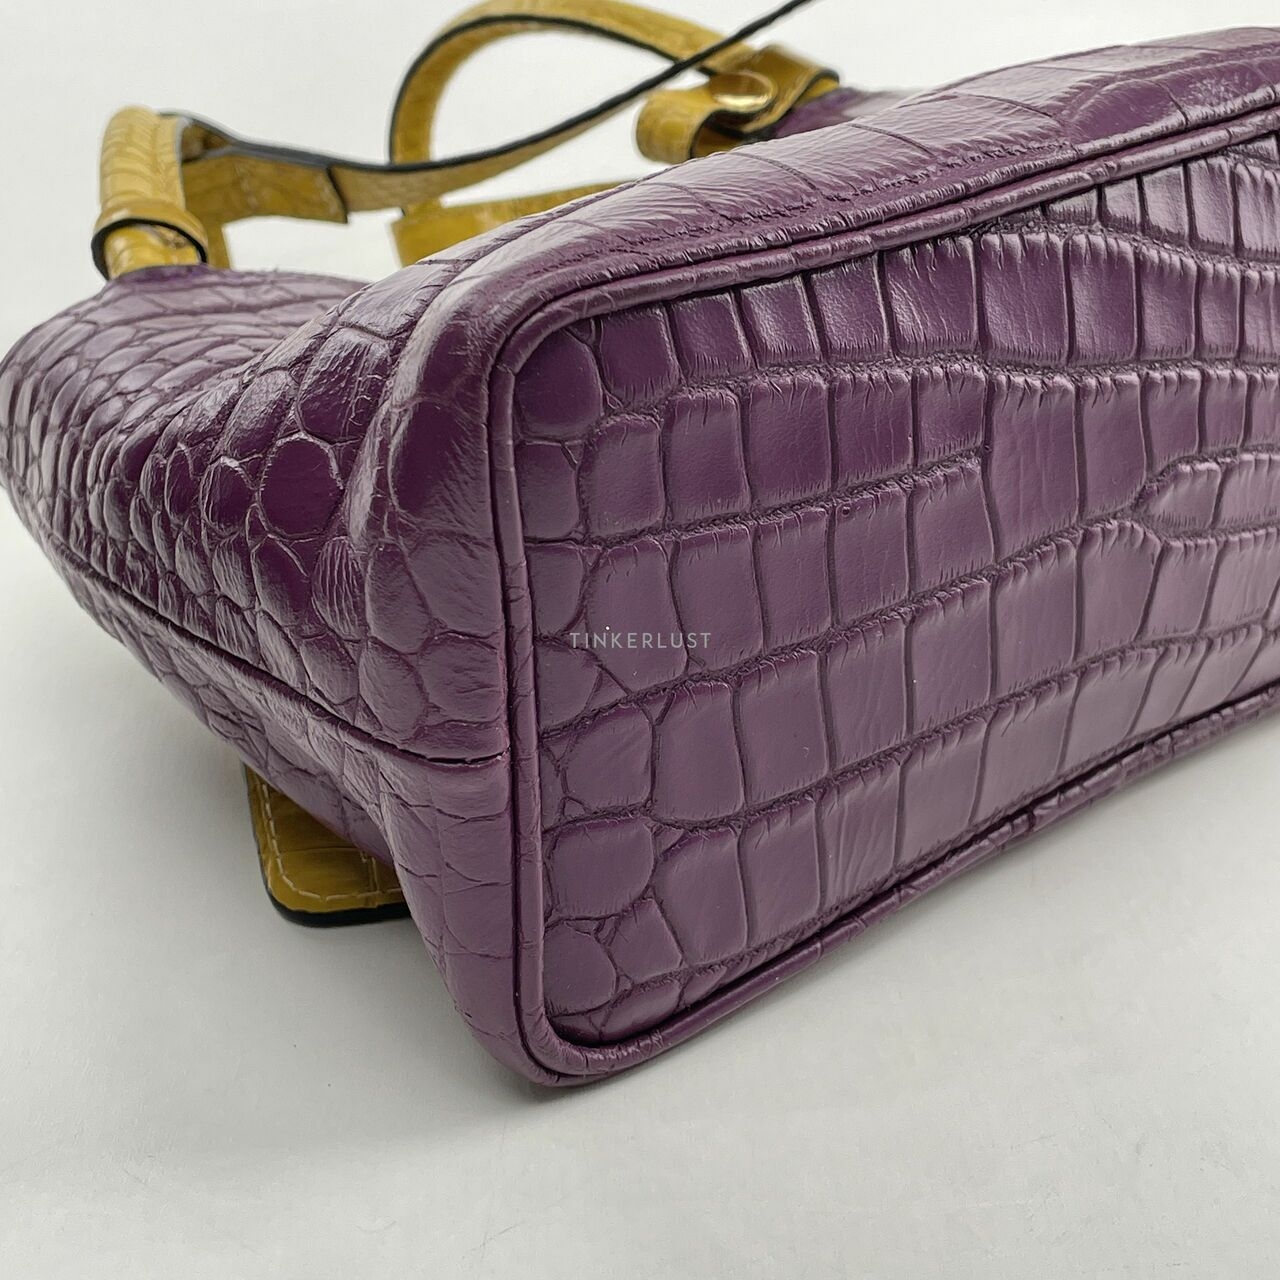 Rounn Purple & Yellow Shoulder Bag